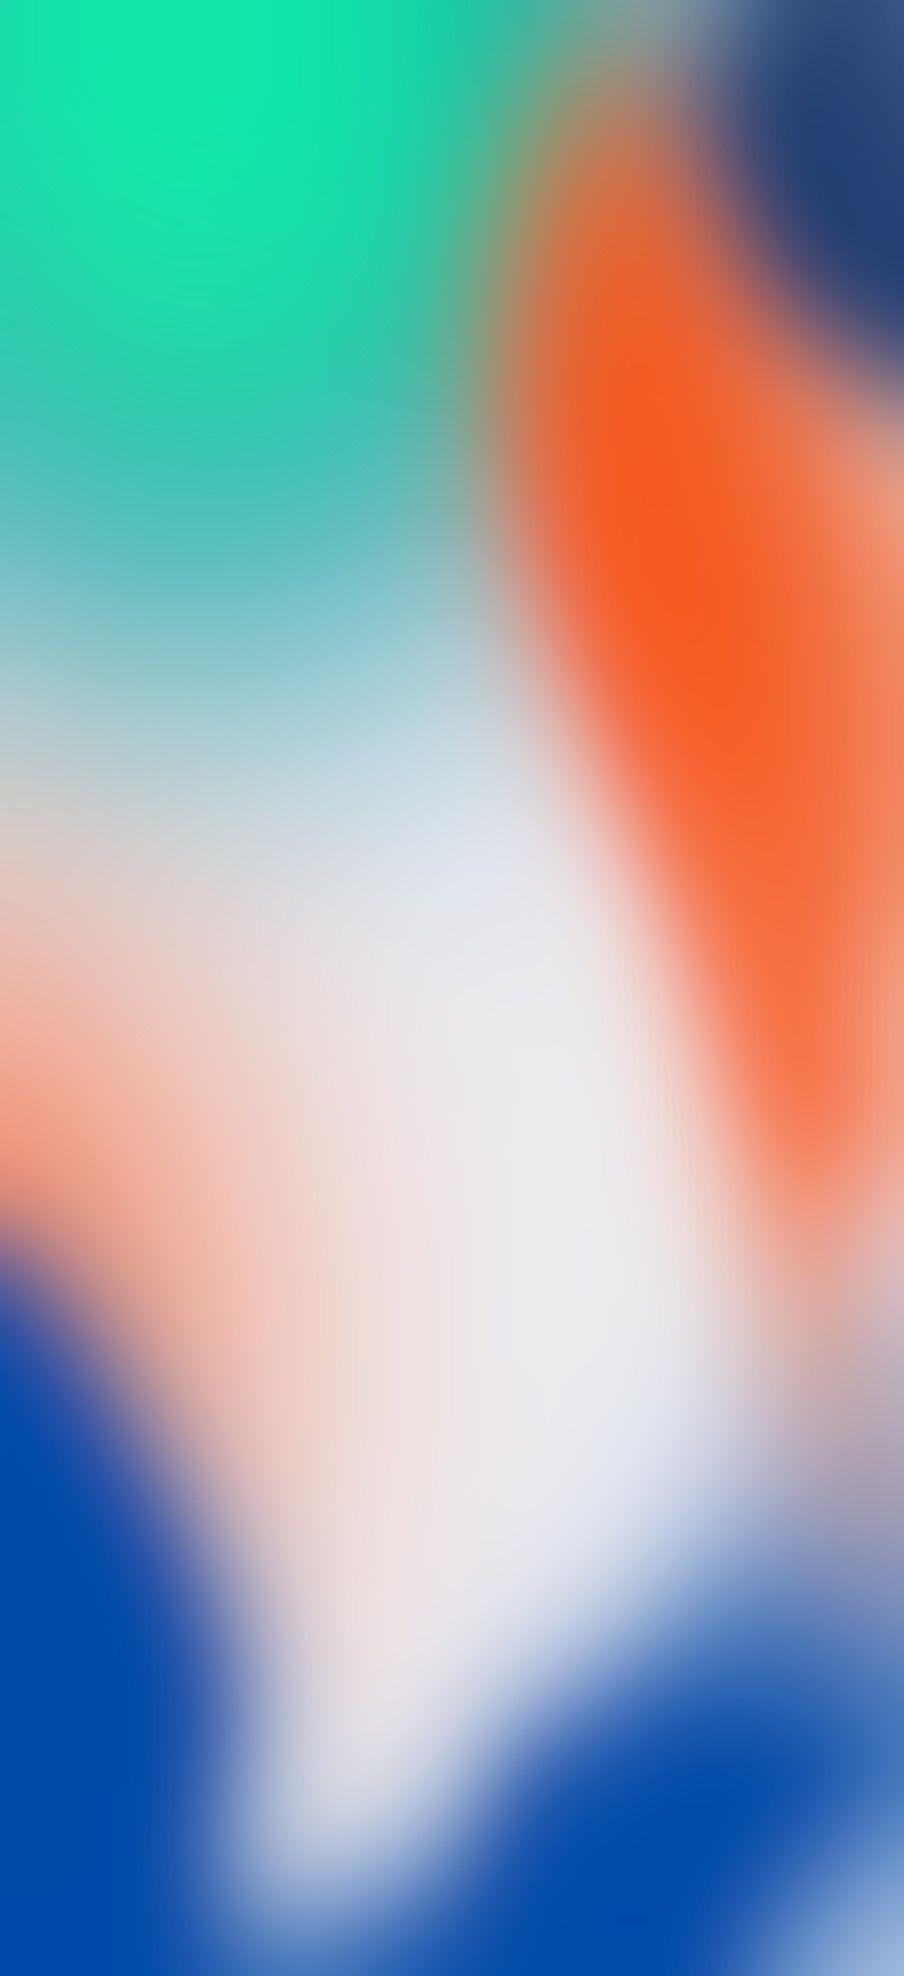 iOS 11, iPhone X, orange, green, blue, Stock, abstract, apple